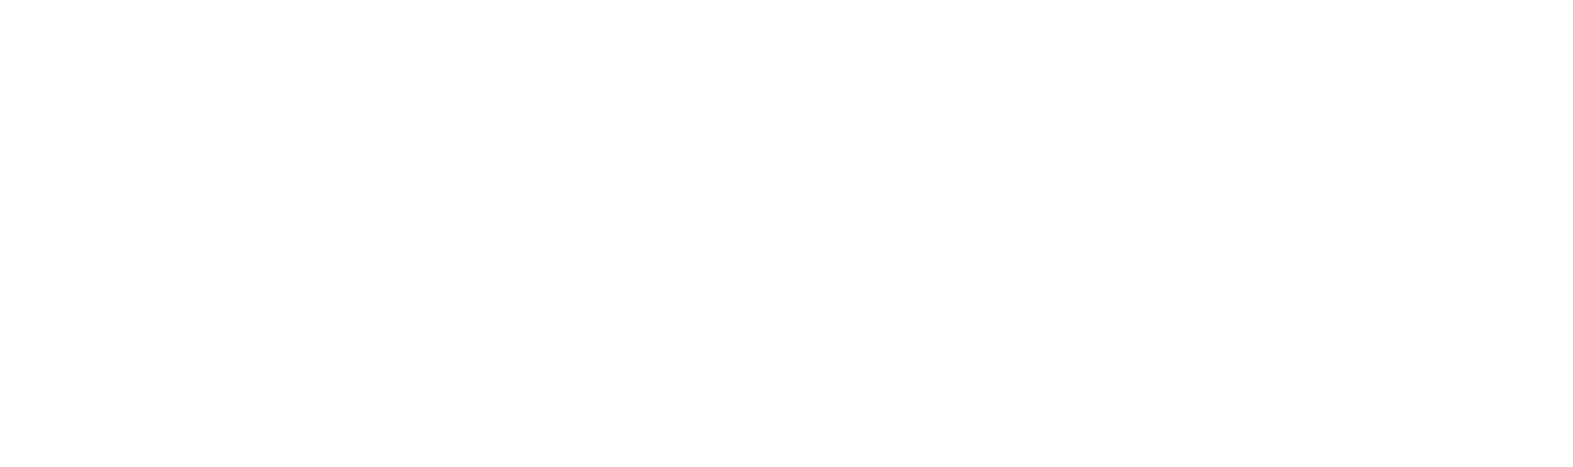 AS ONE DESIGN logo for desktop